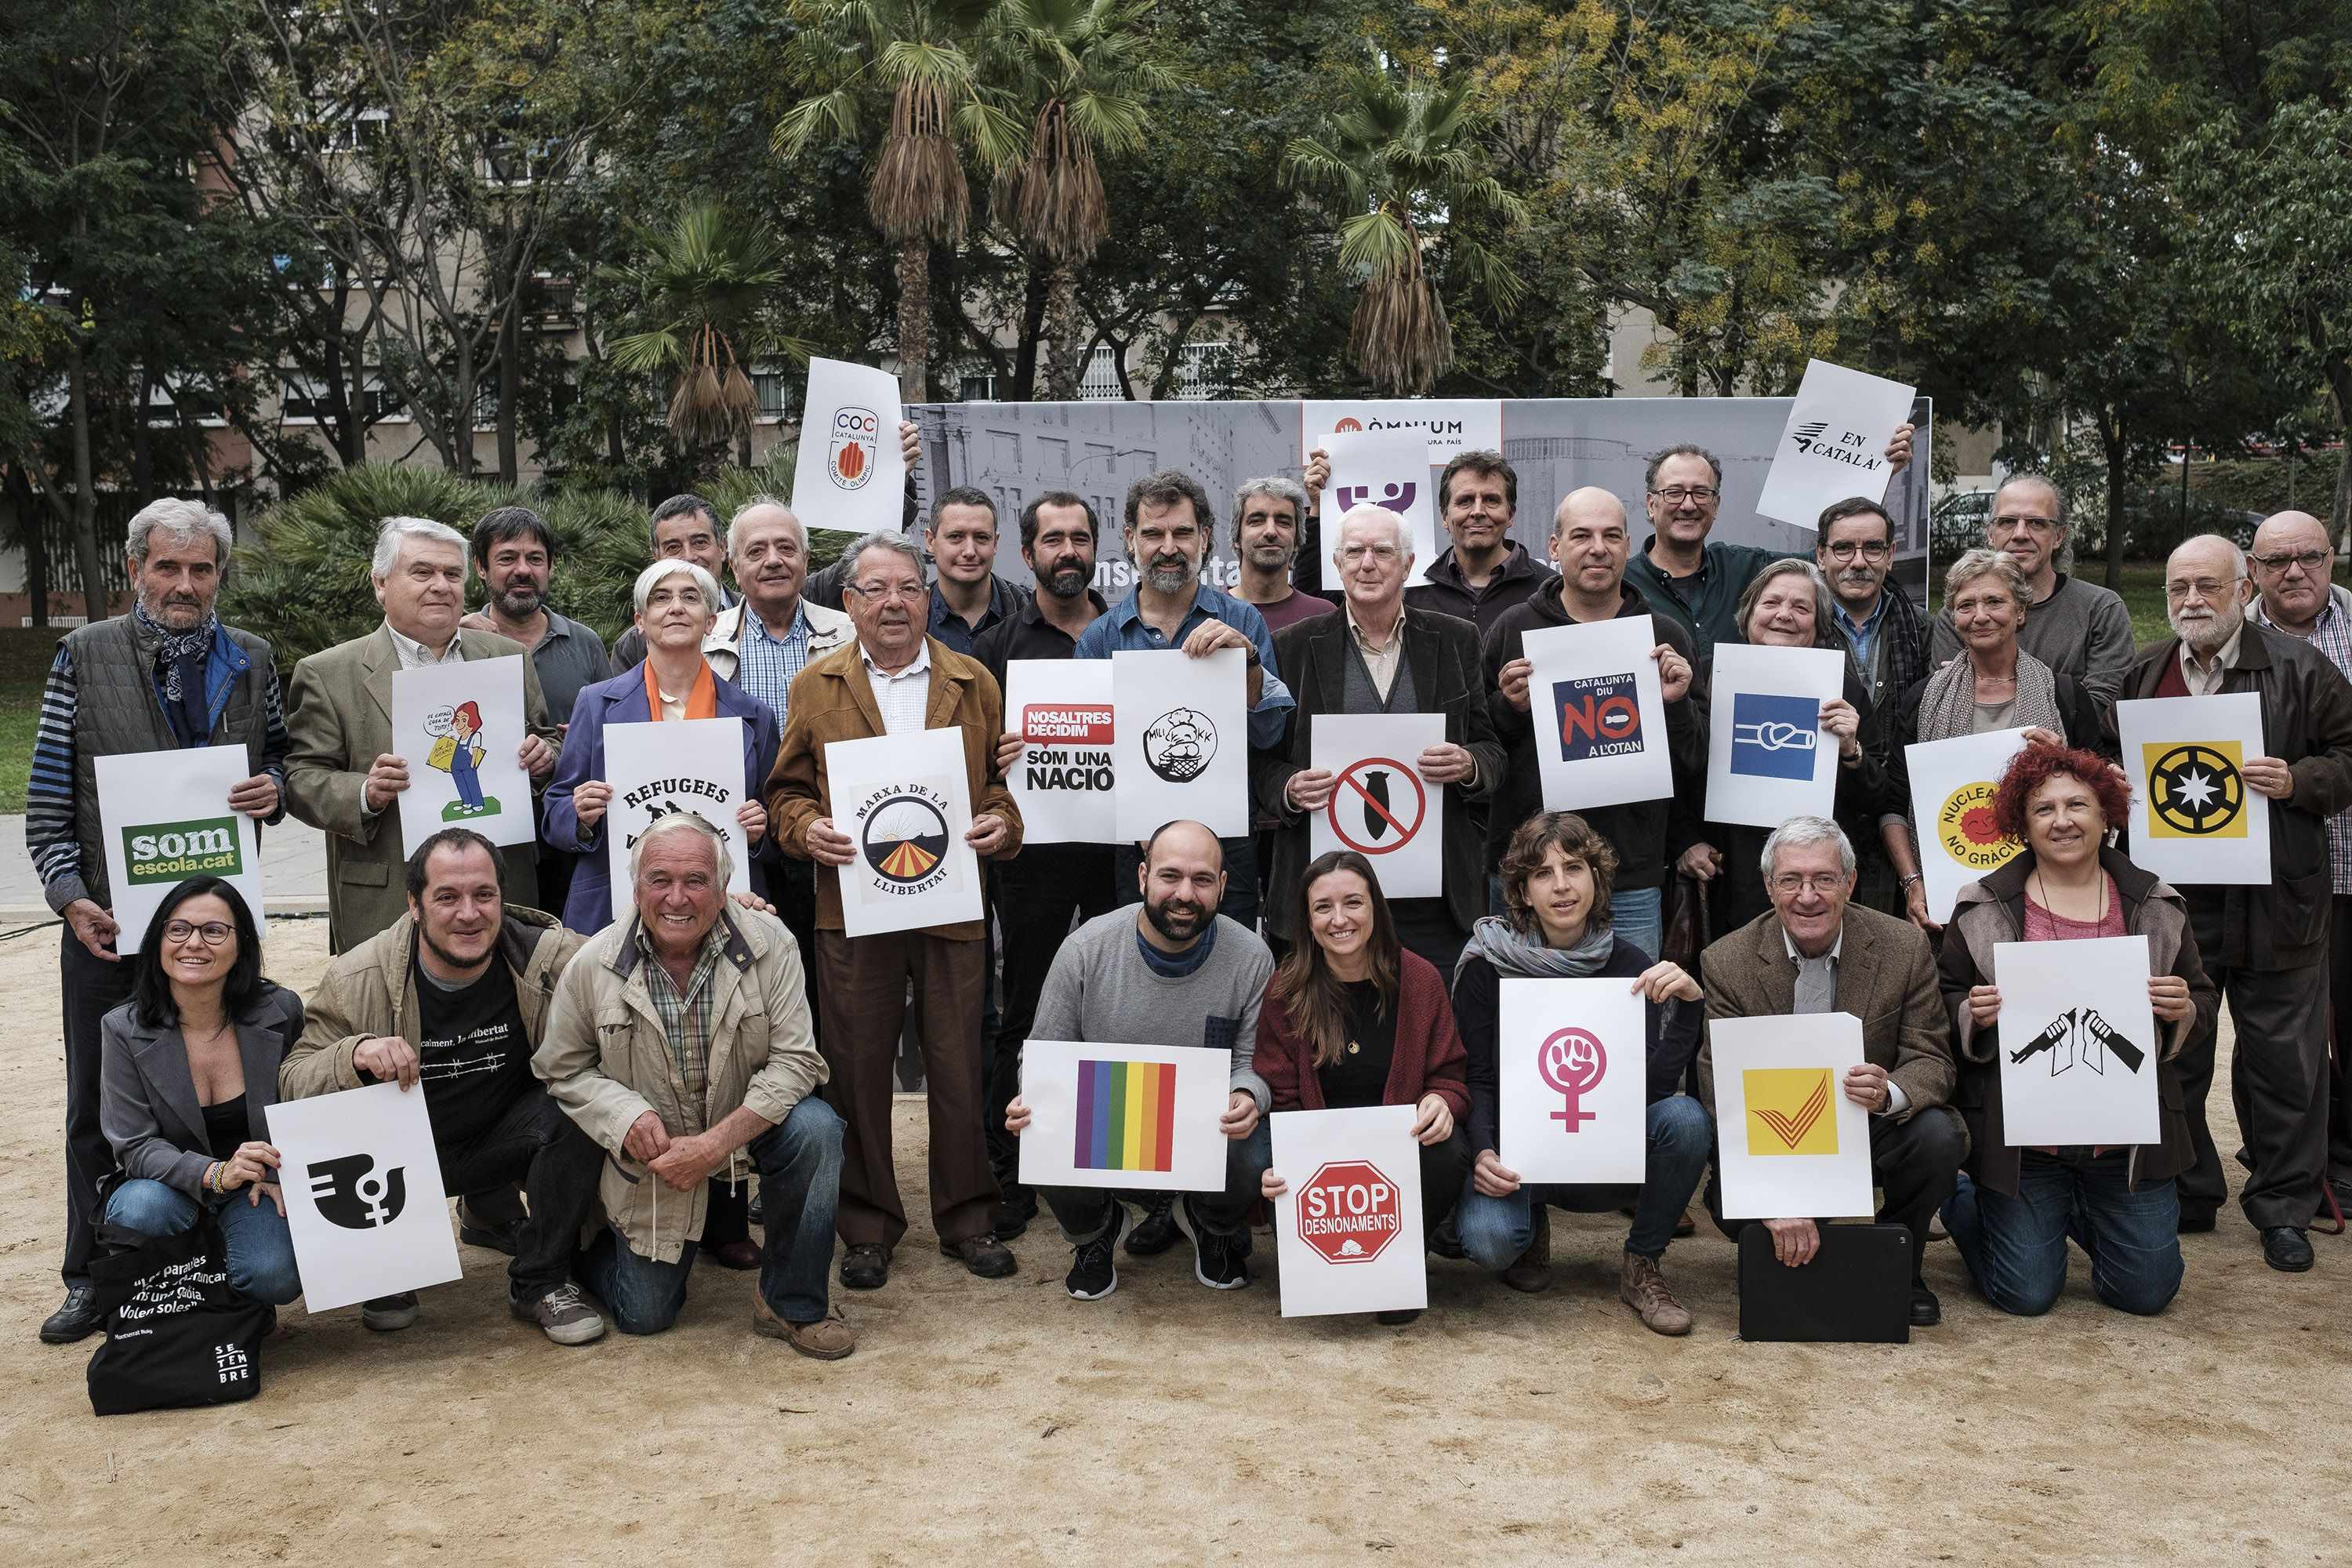 "Lluites compartides": Òmnium reivindica las luchas sociales